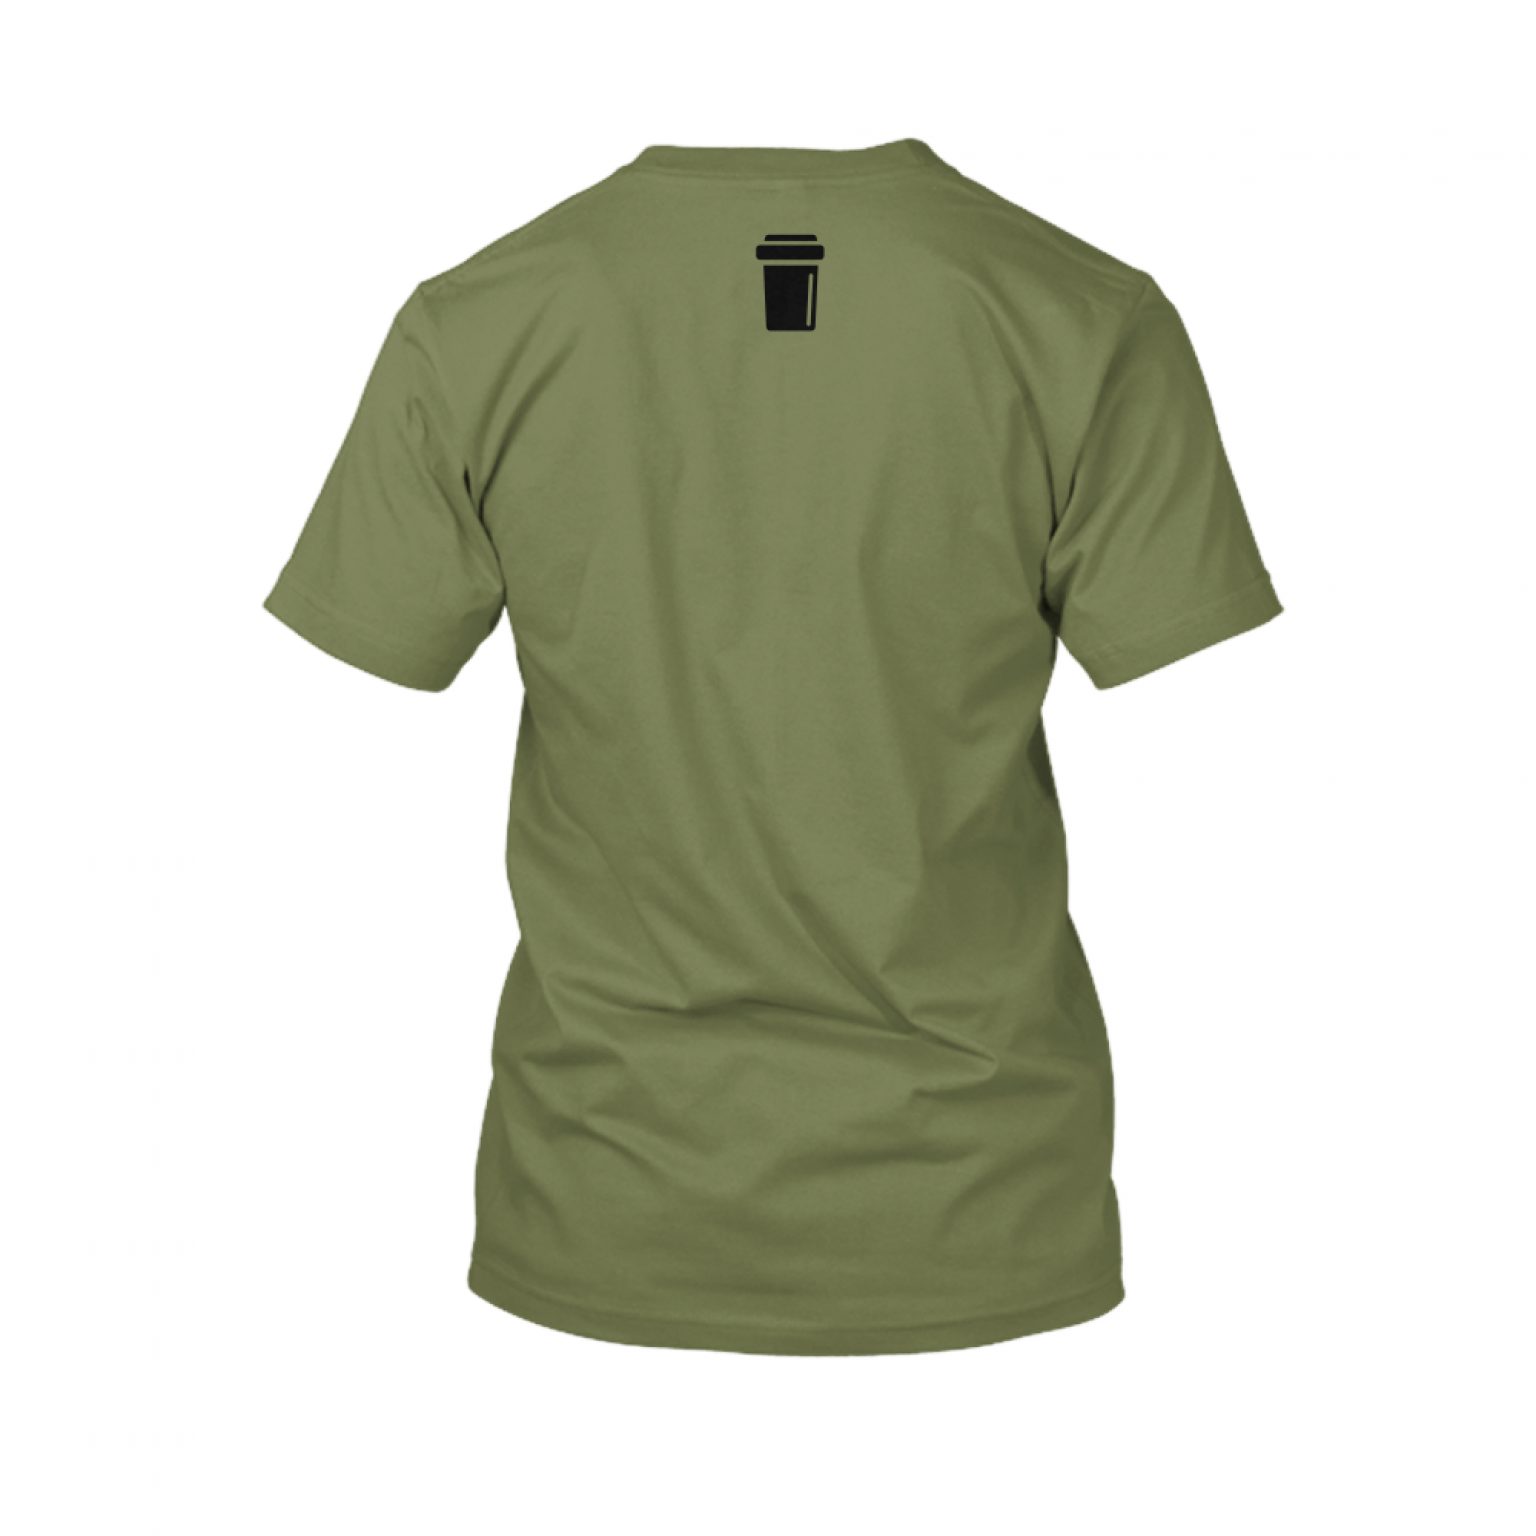 amcap Herren Shirt military back